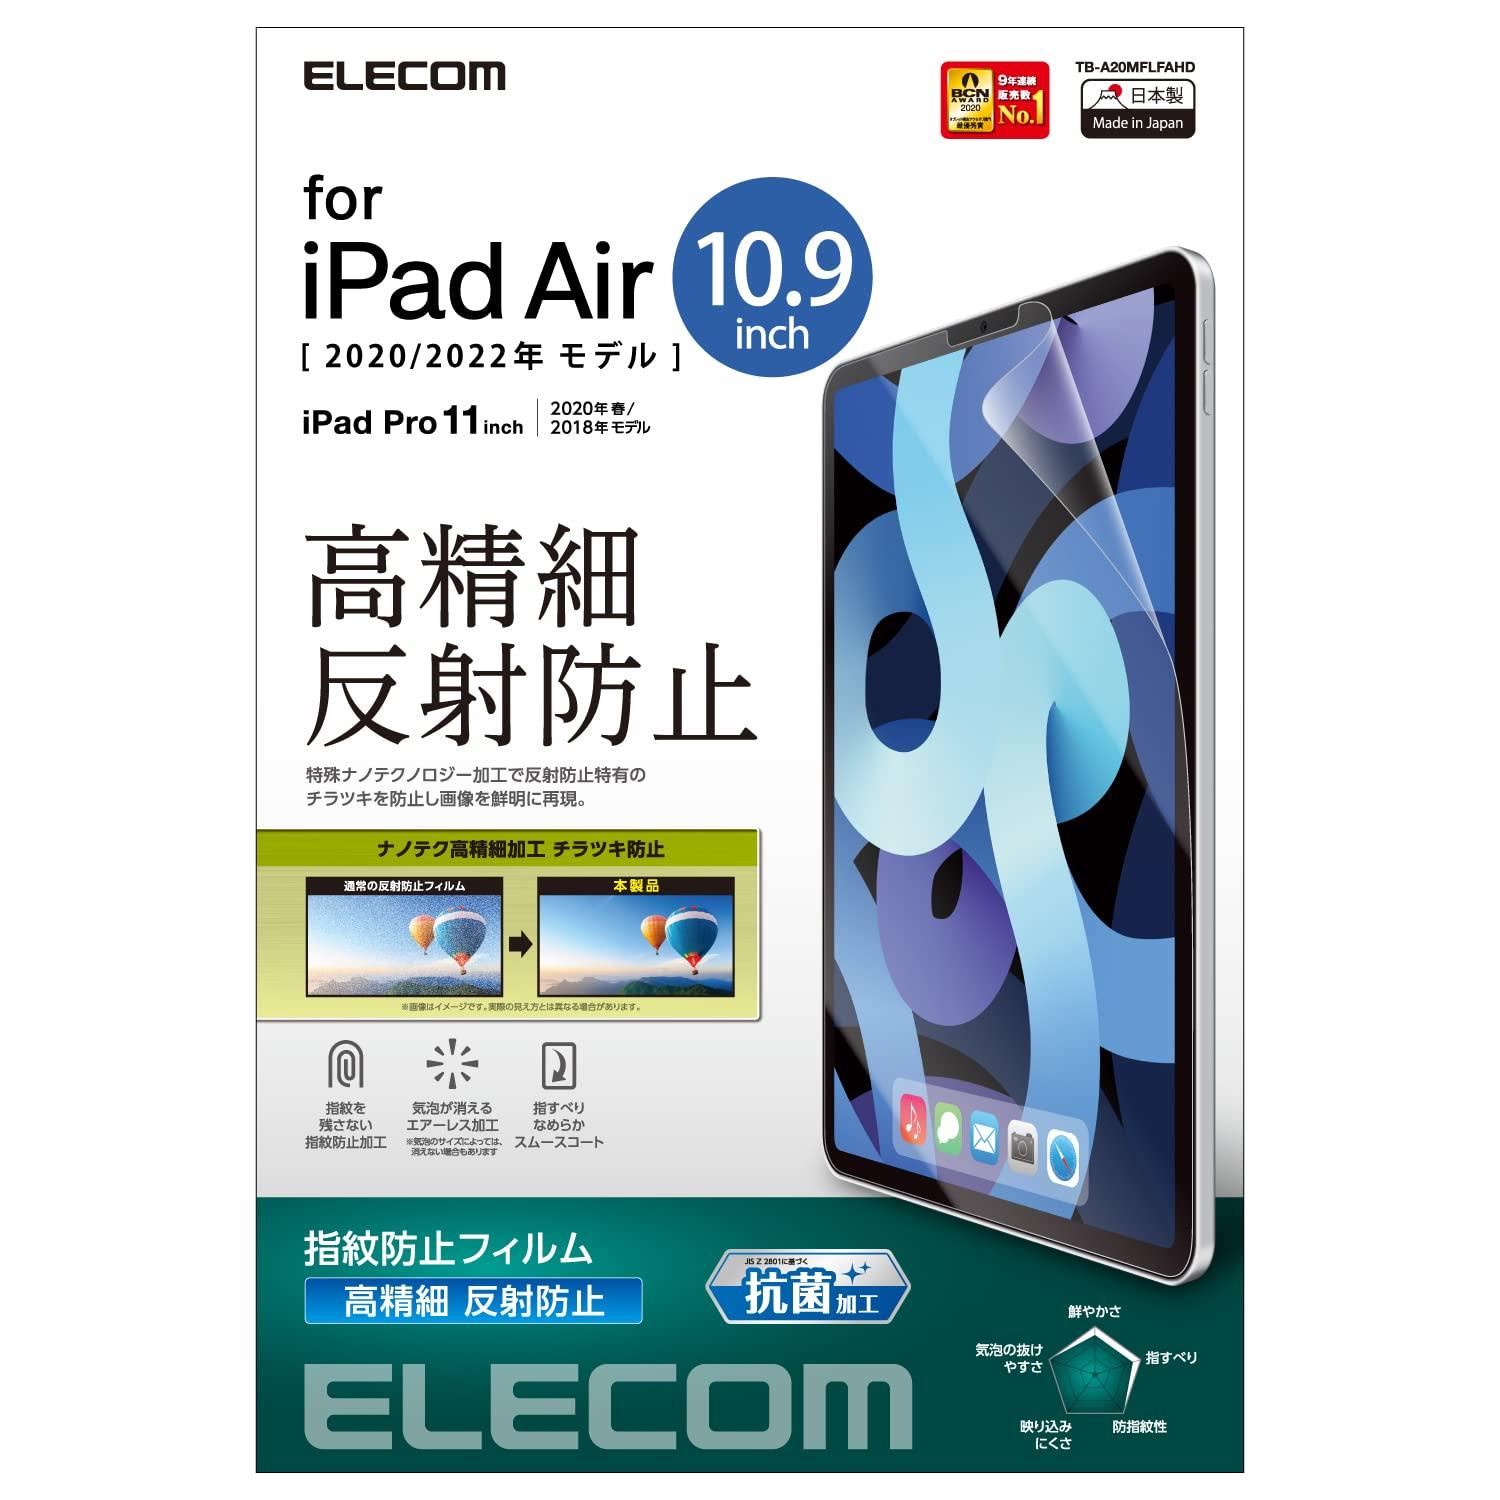 iPad Air 10.9C`(4/2020Nf)ptB  wh~ ˖h~ / TB-A20MFLFAHD ELECOM GR